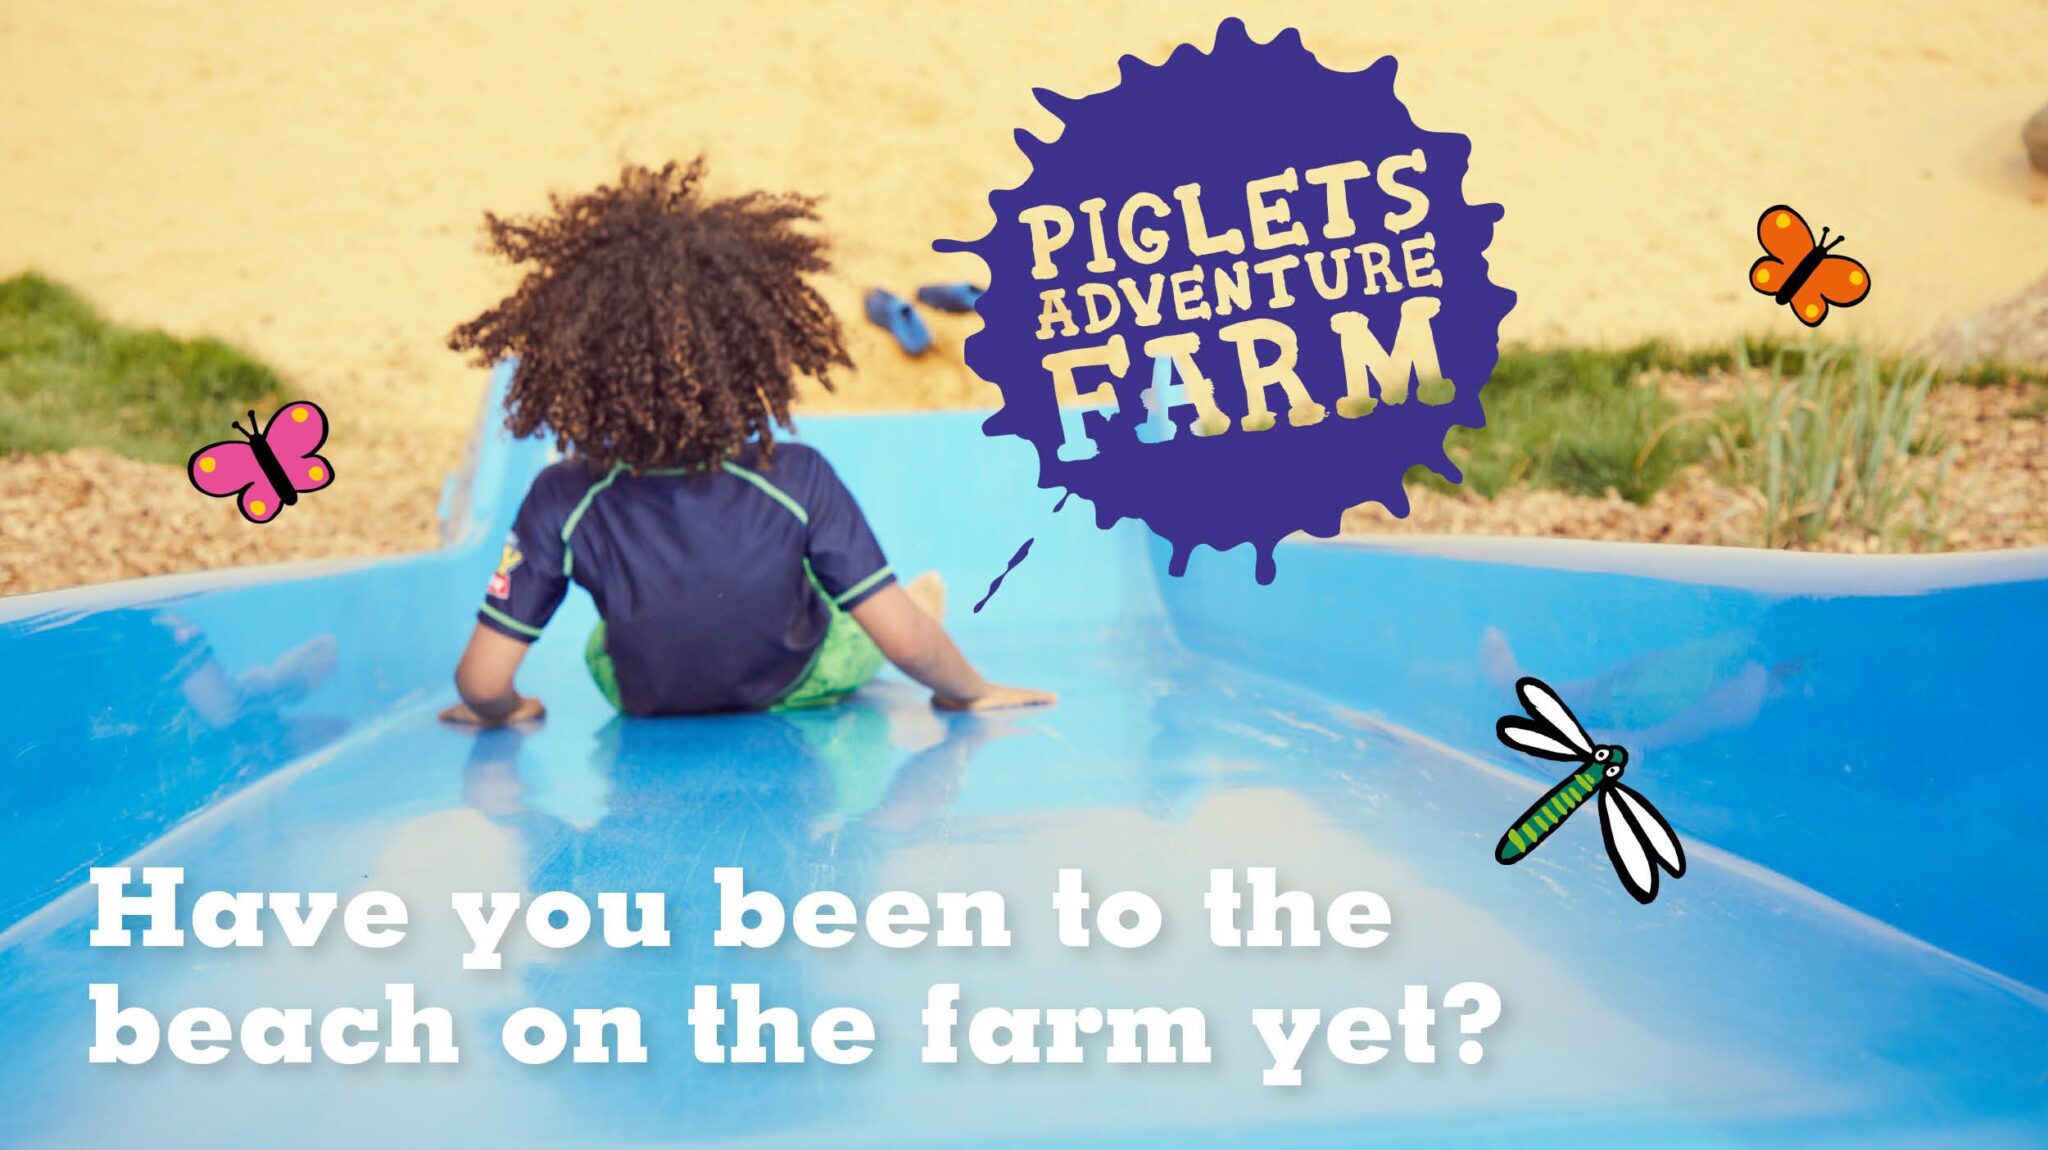 Piglets Adventure Farm